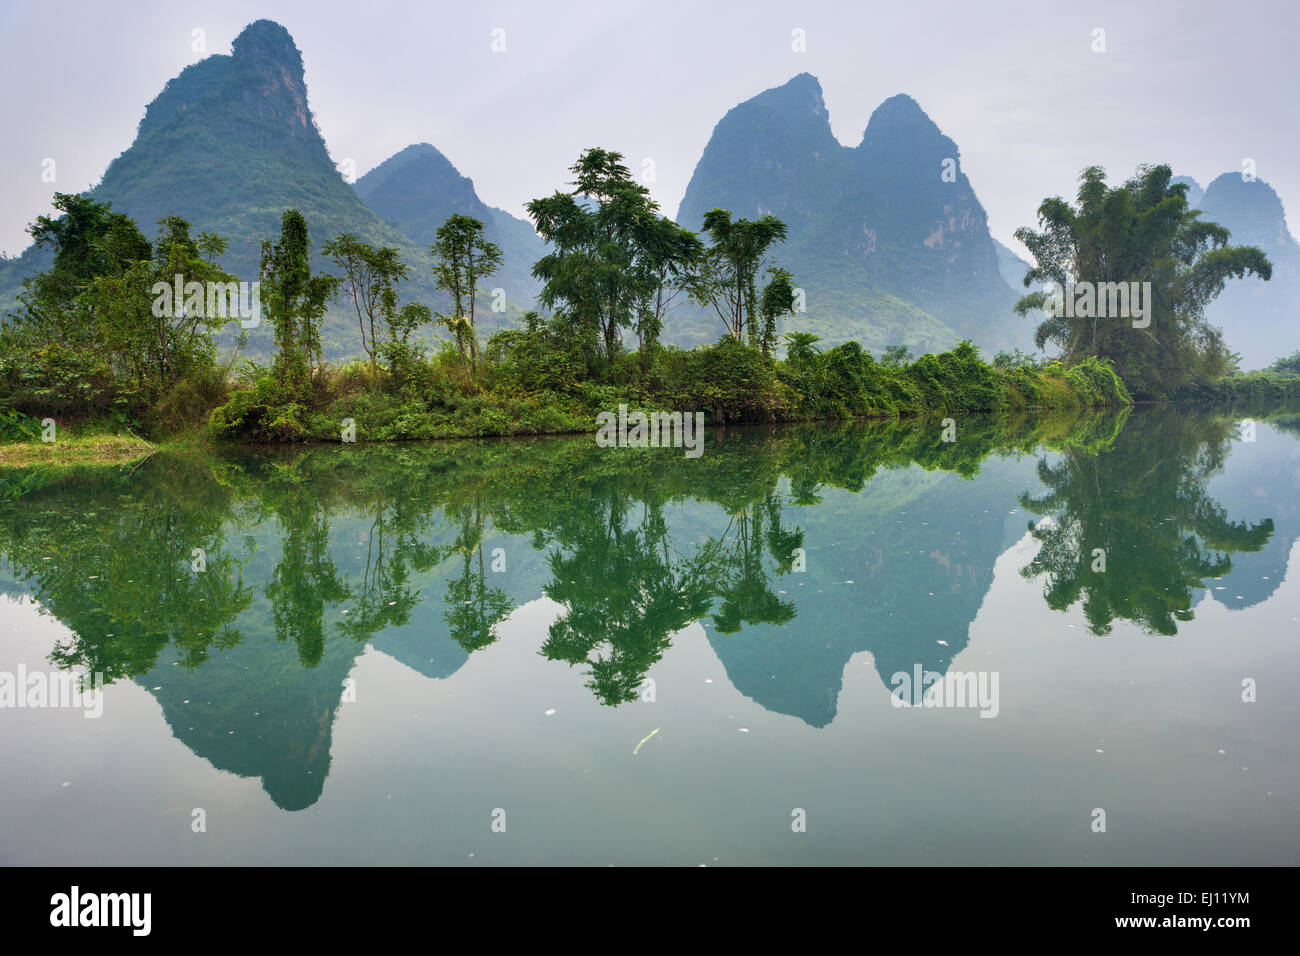 Yulong River, China, Asia, region, Guangxi, river, flow, mountains, karst, scenery, reflection Stock Photo